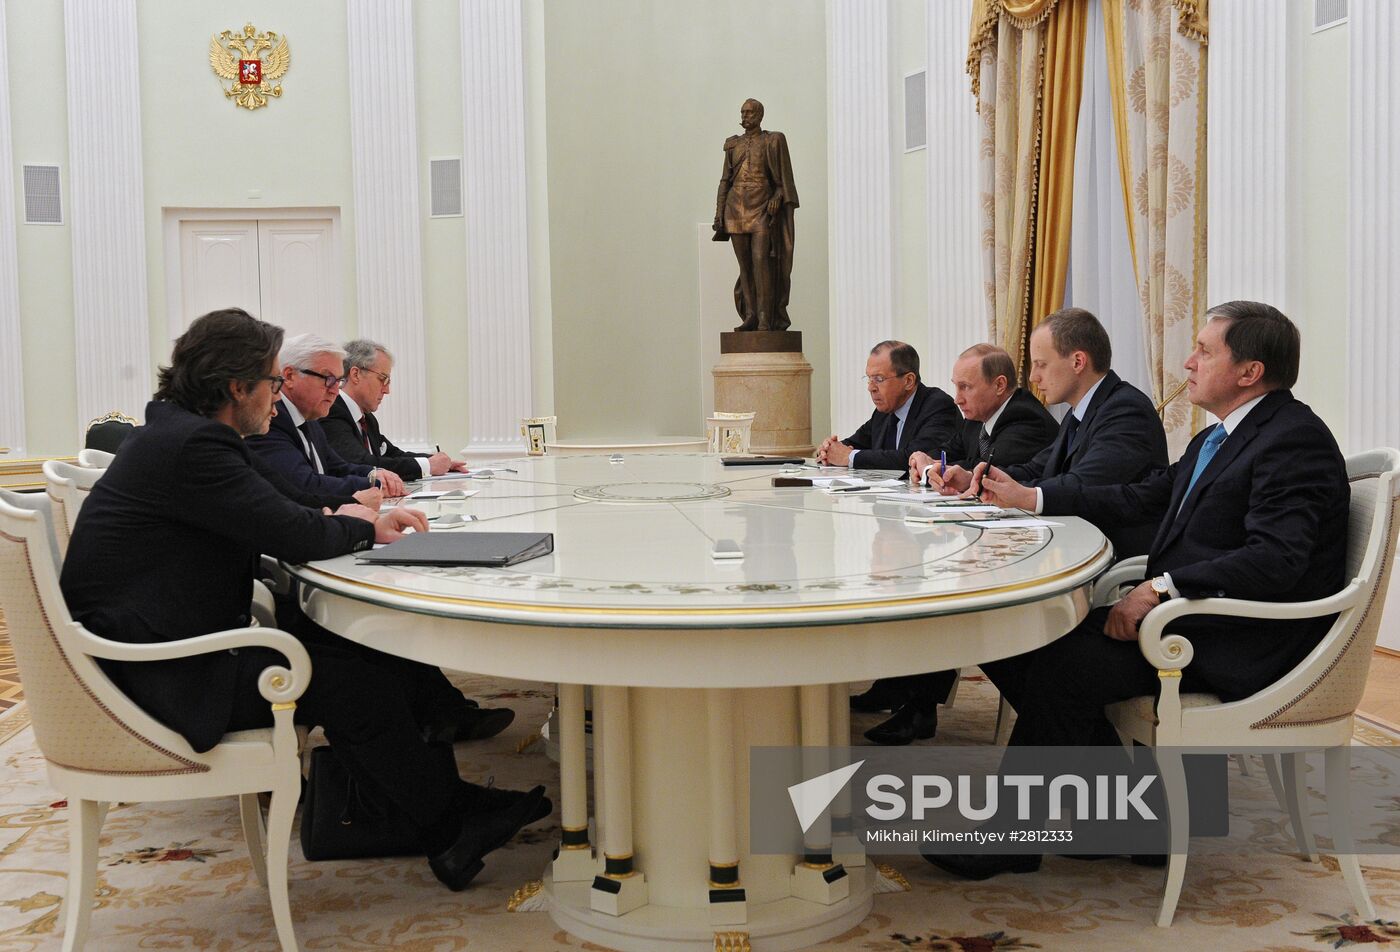 Meeting of Russian President Vladimir Putin and German Minister for Foreign Affairs Frank-Walter Steinmeier